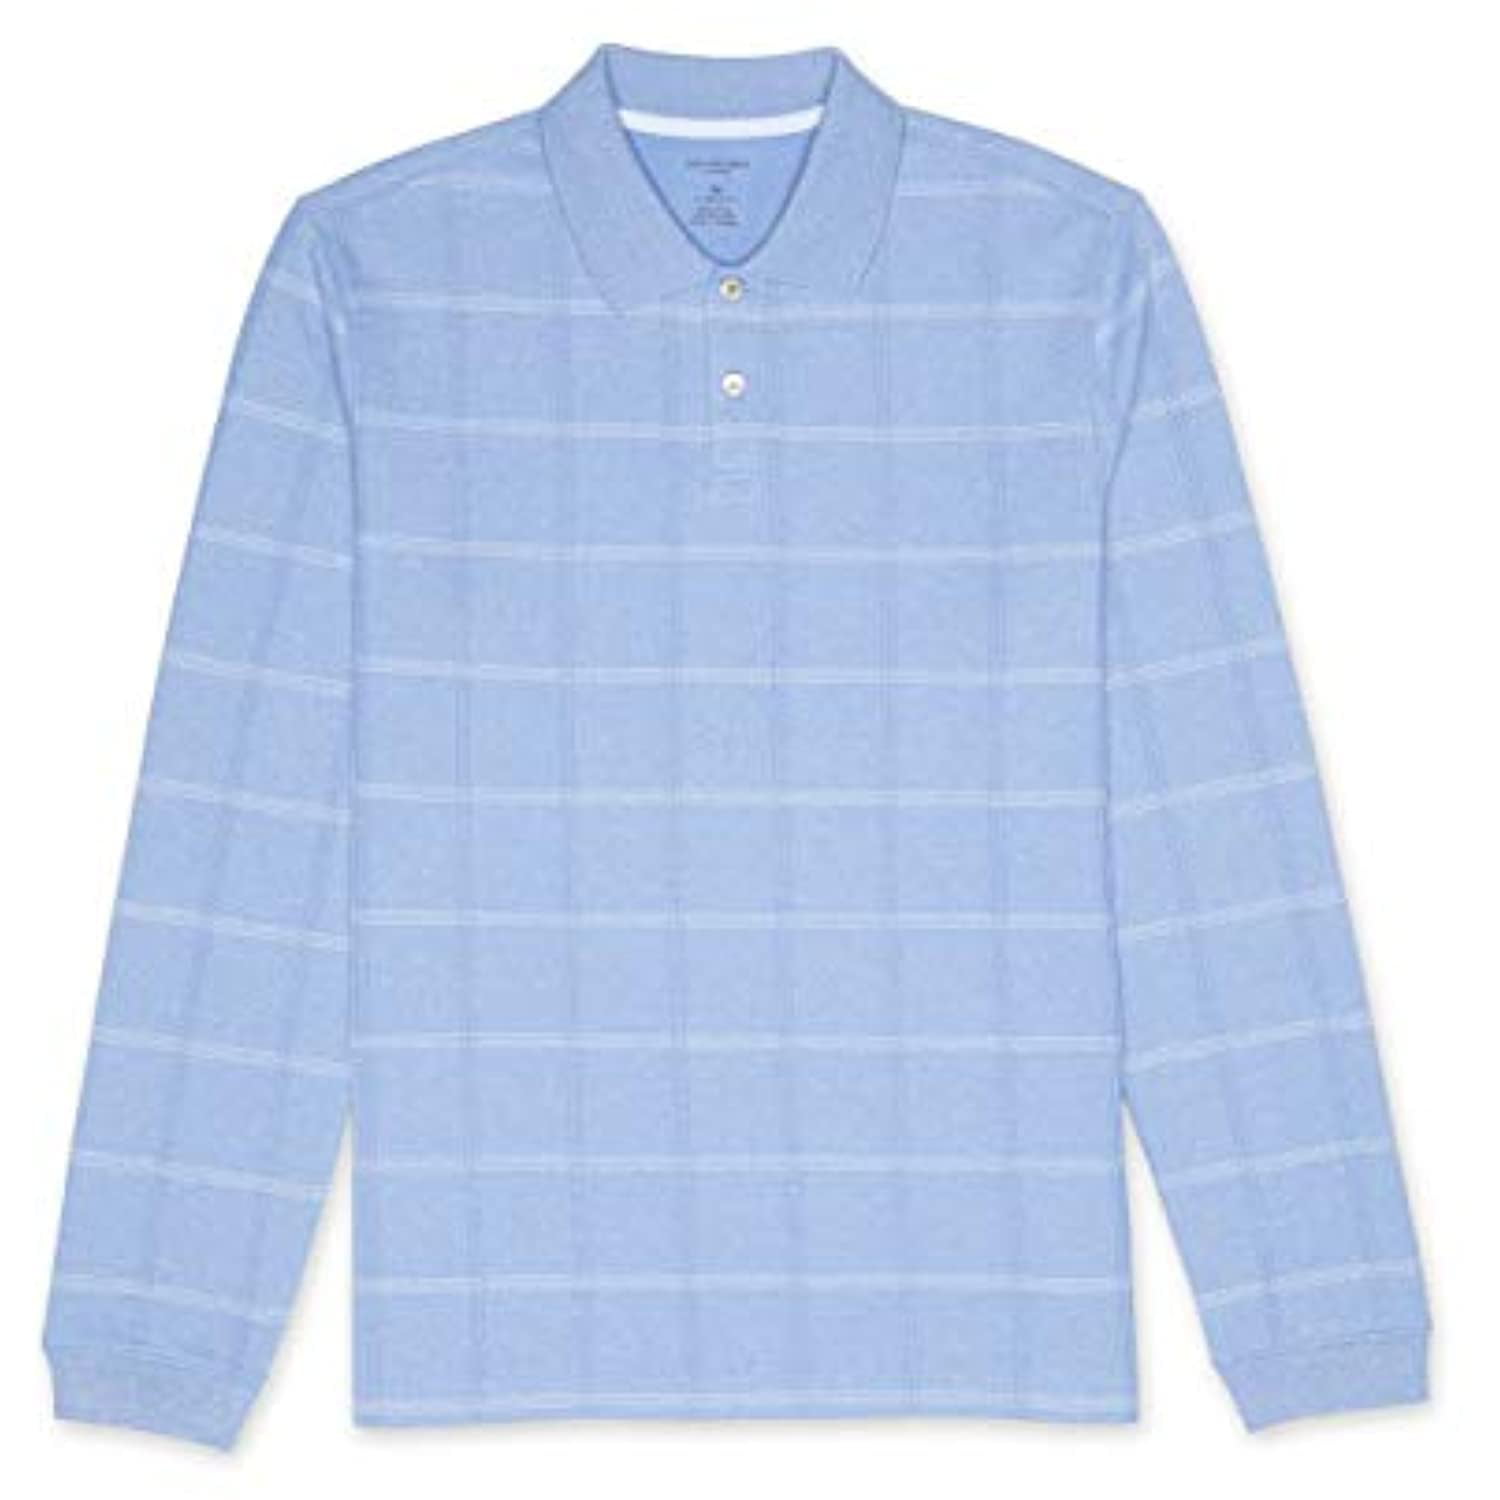 Van Heusen Mens Flex Long Sleeve Jaspe Solid Polo Shirt